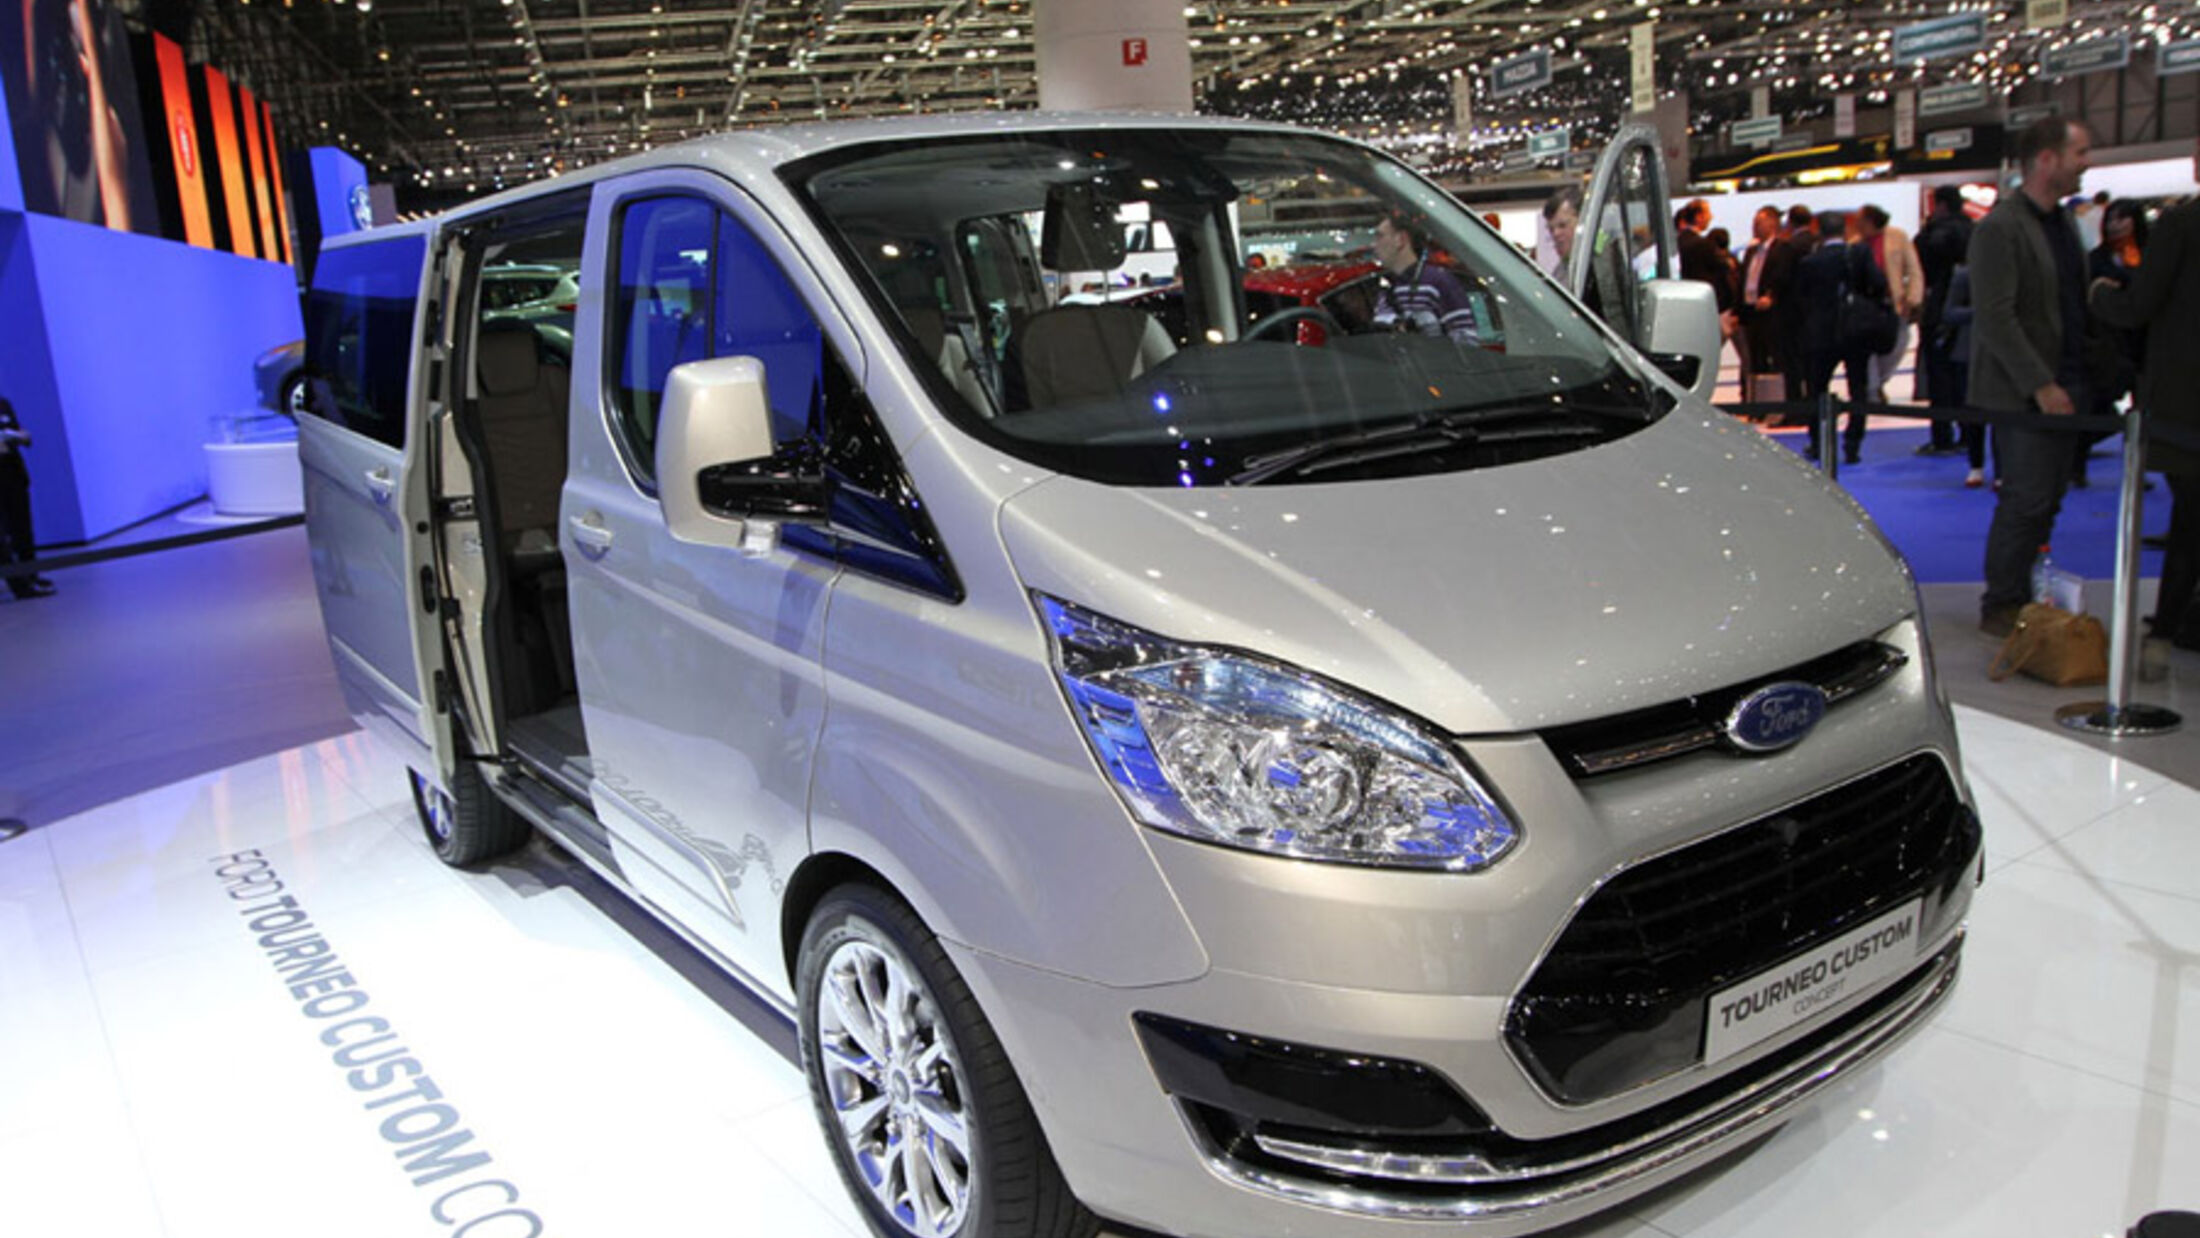 https://imgr1.auto-motor-und-sport.de/Ford-Tourneo-Custom-Concept-Autosalon-Genf-2012-Messe-jsonLd16x9-1cf288d3-577871.jpg